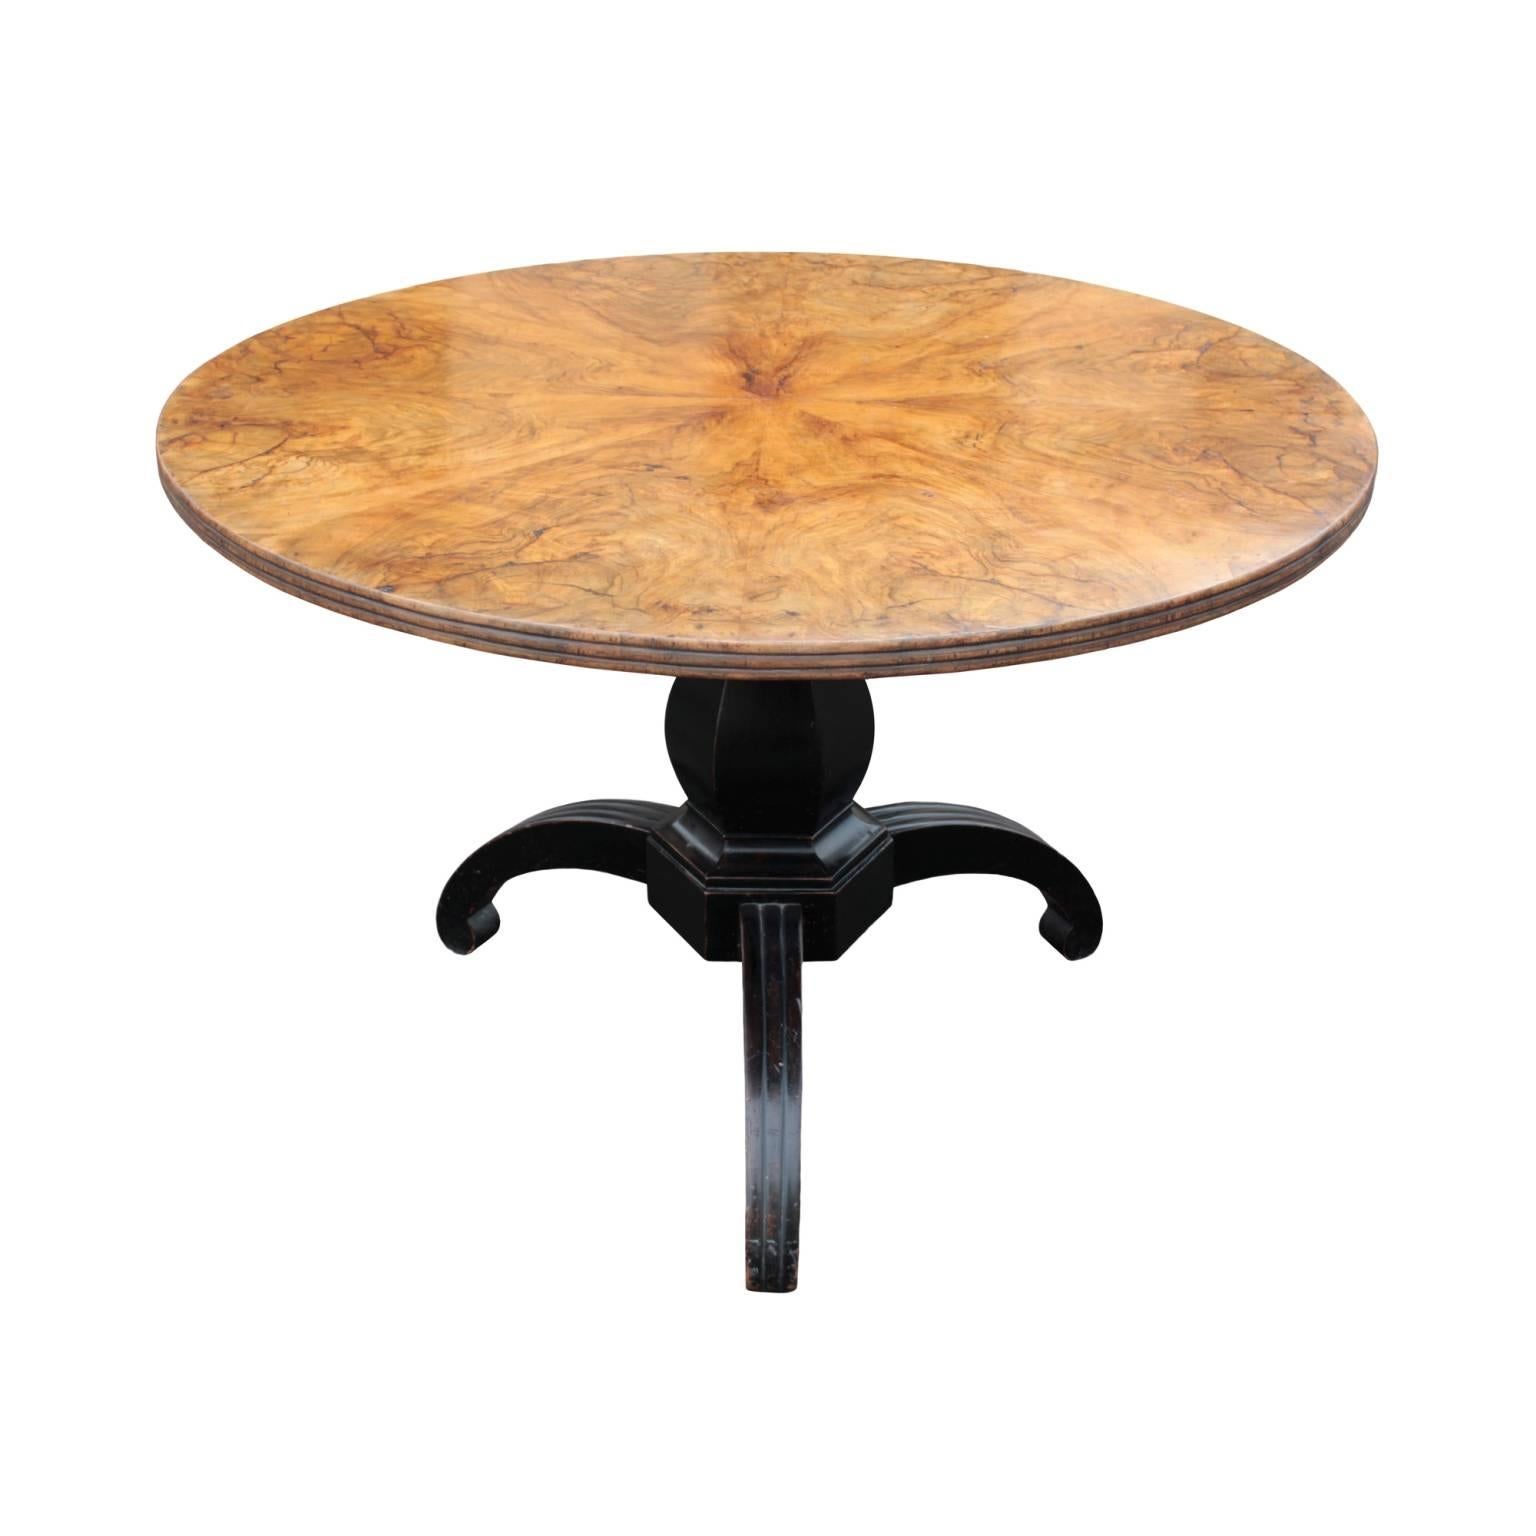 German Biedermeier Period Round Pedestal Tilt-Top Center Table For Sale